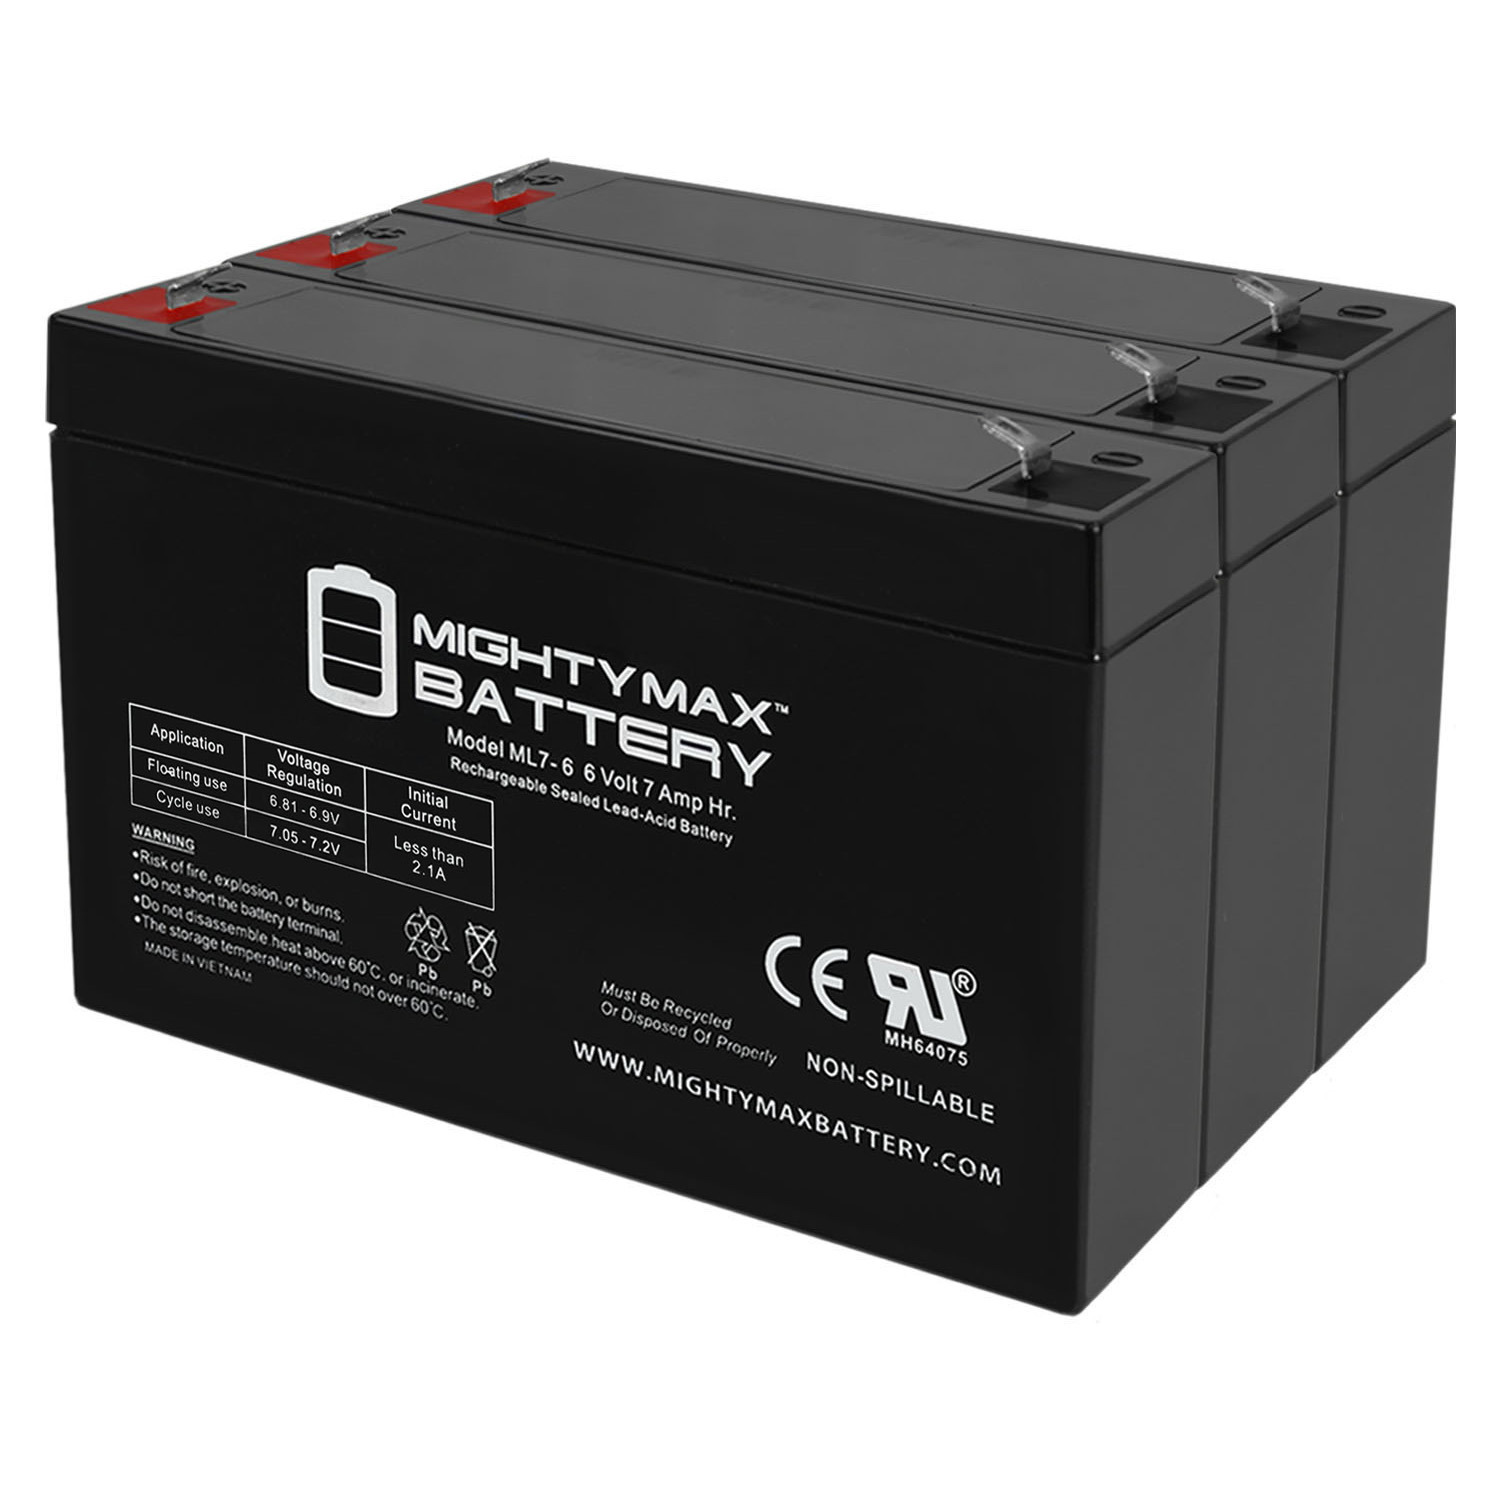 6V 7Ah SLA Replacement Battery for Elan 1610 - 3 Pack